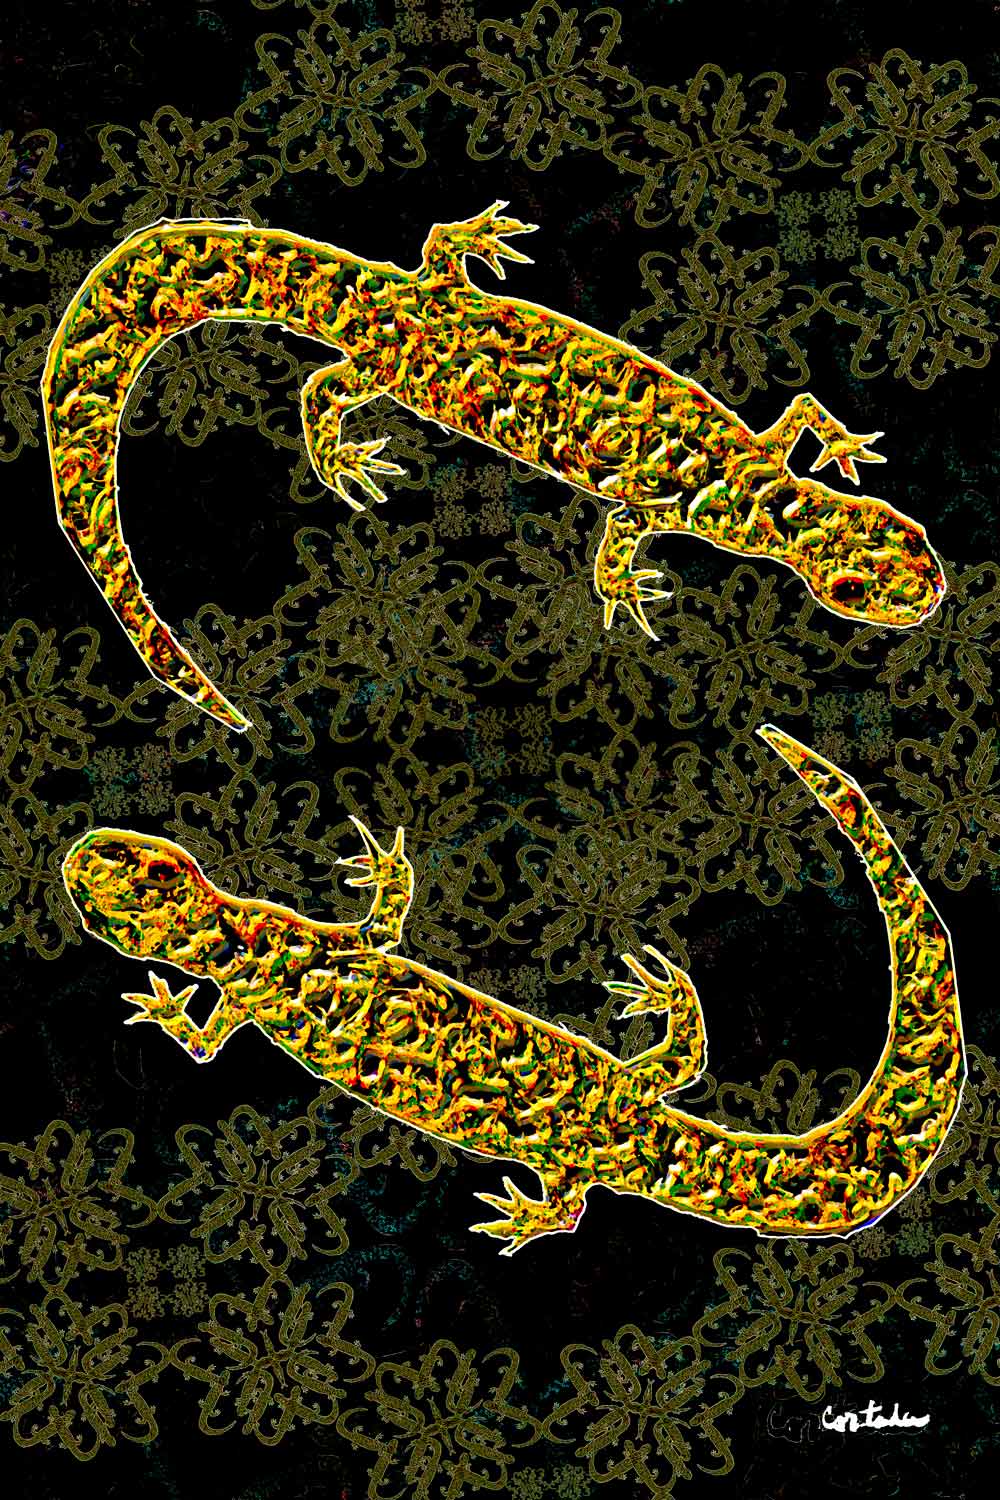 Xavier Cortada, “Florida is… Salamanders,” digital art, 2015. (www.florida-is.com)